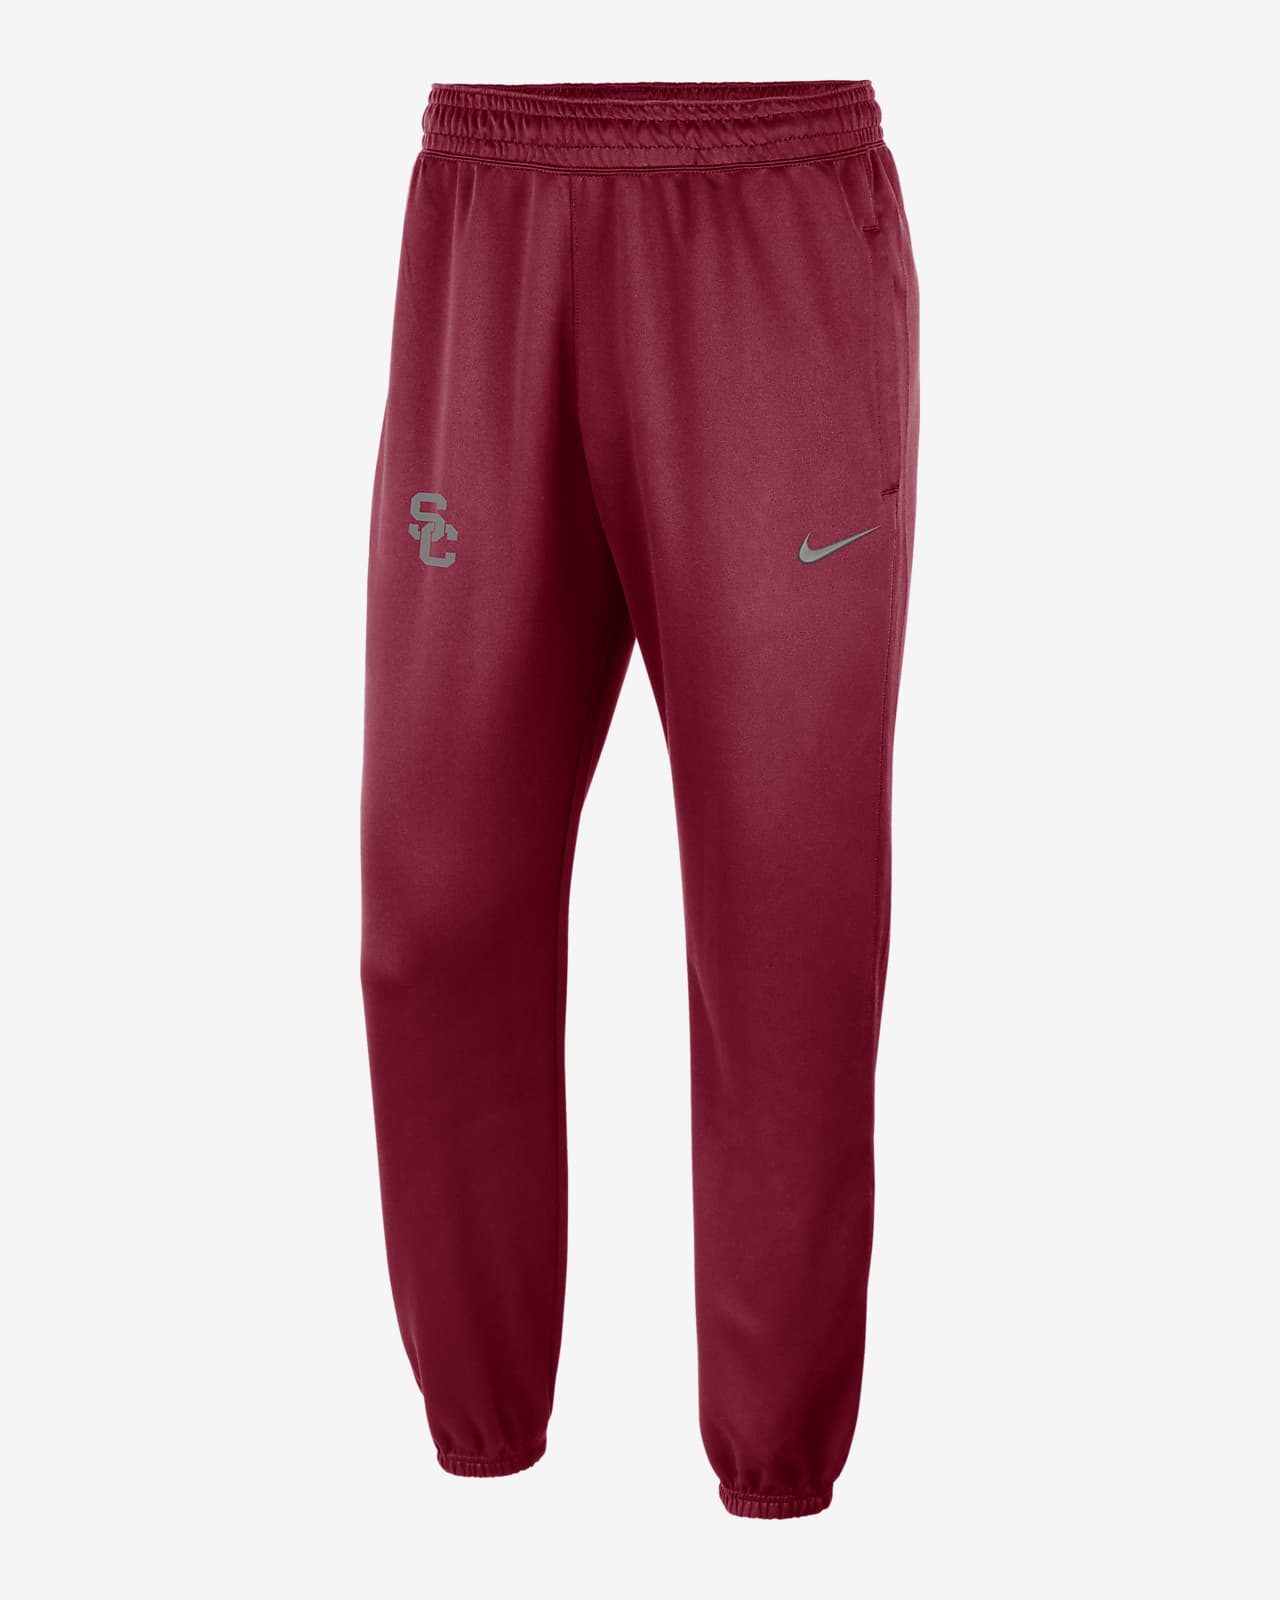 Nike College Dri-FIT Spotlight (USC) Men's Pants